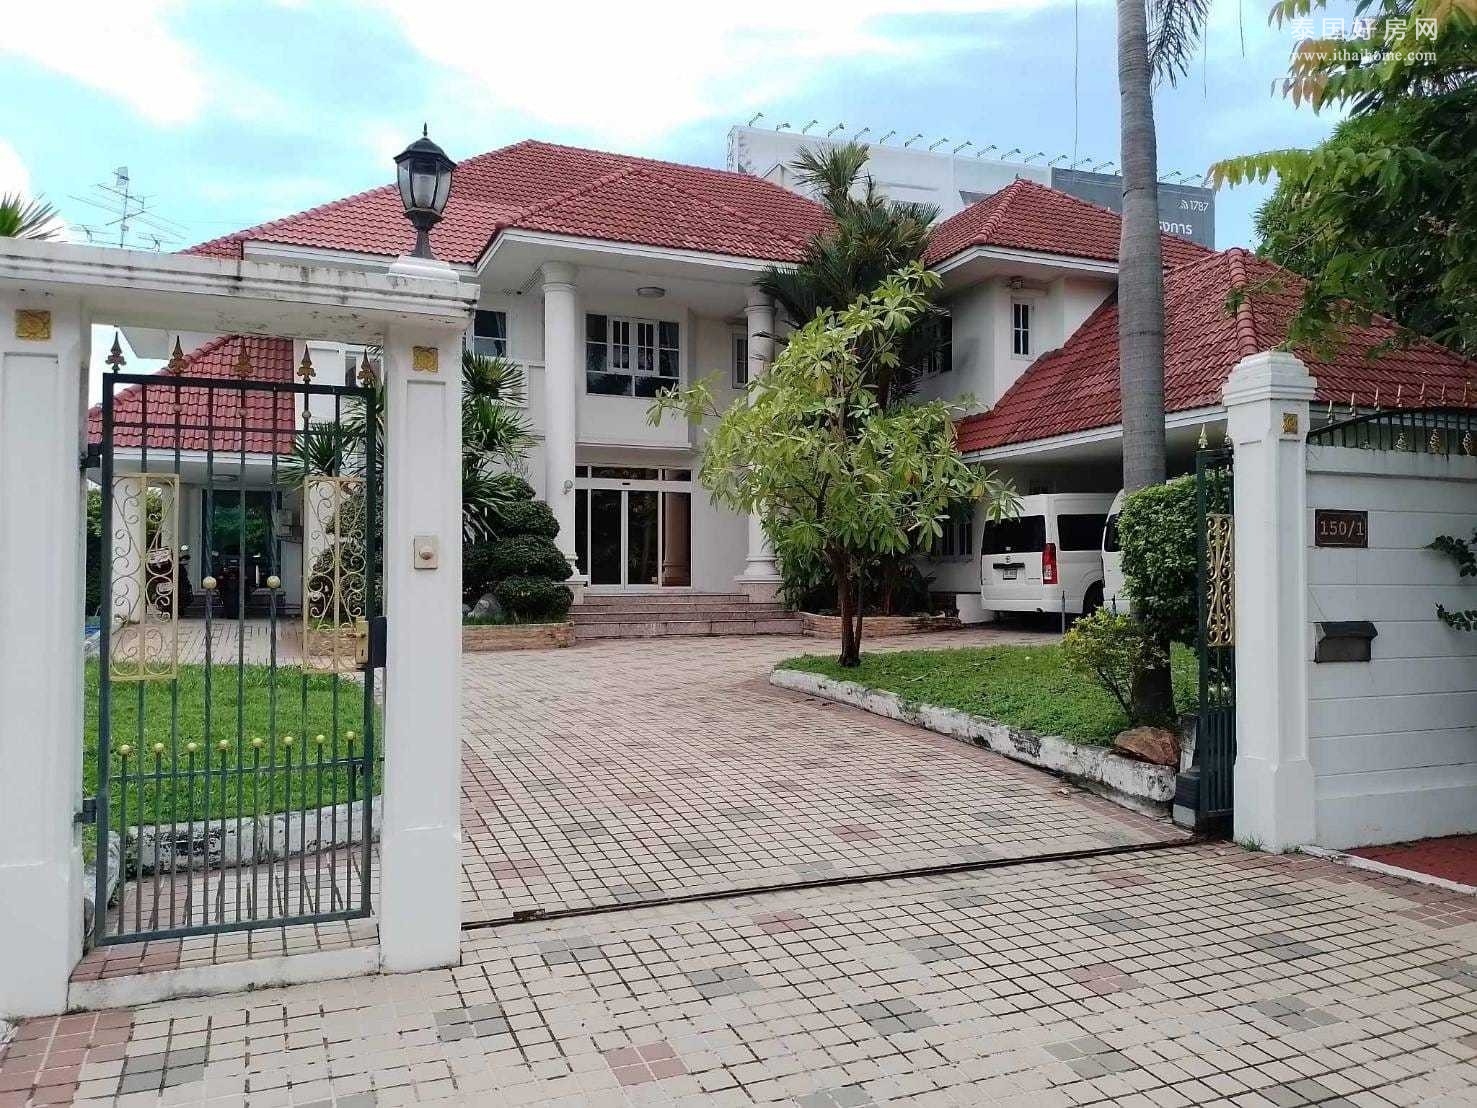 Lakeside Villa 2 独栋别墅出售 6卧1084平米 5800万泰铢